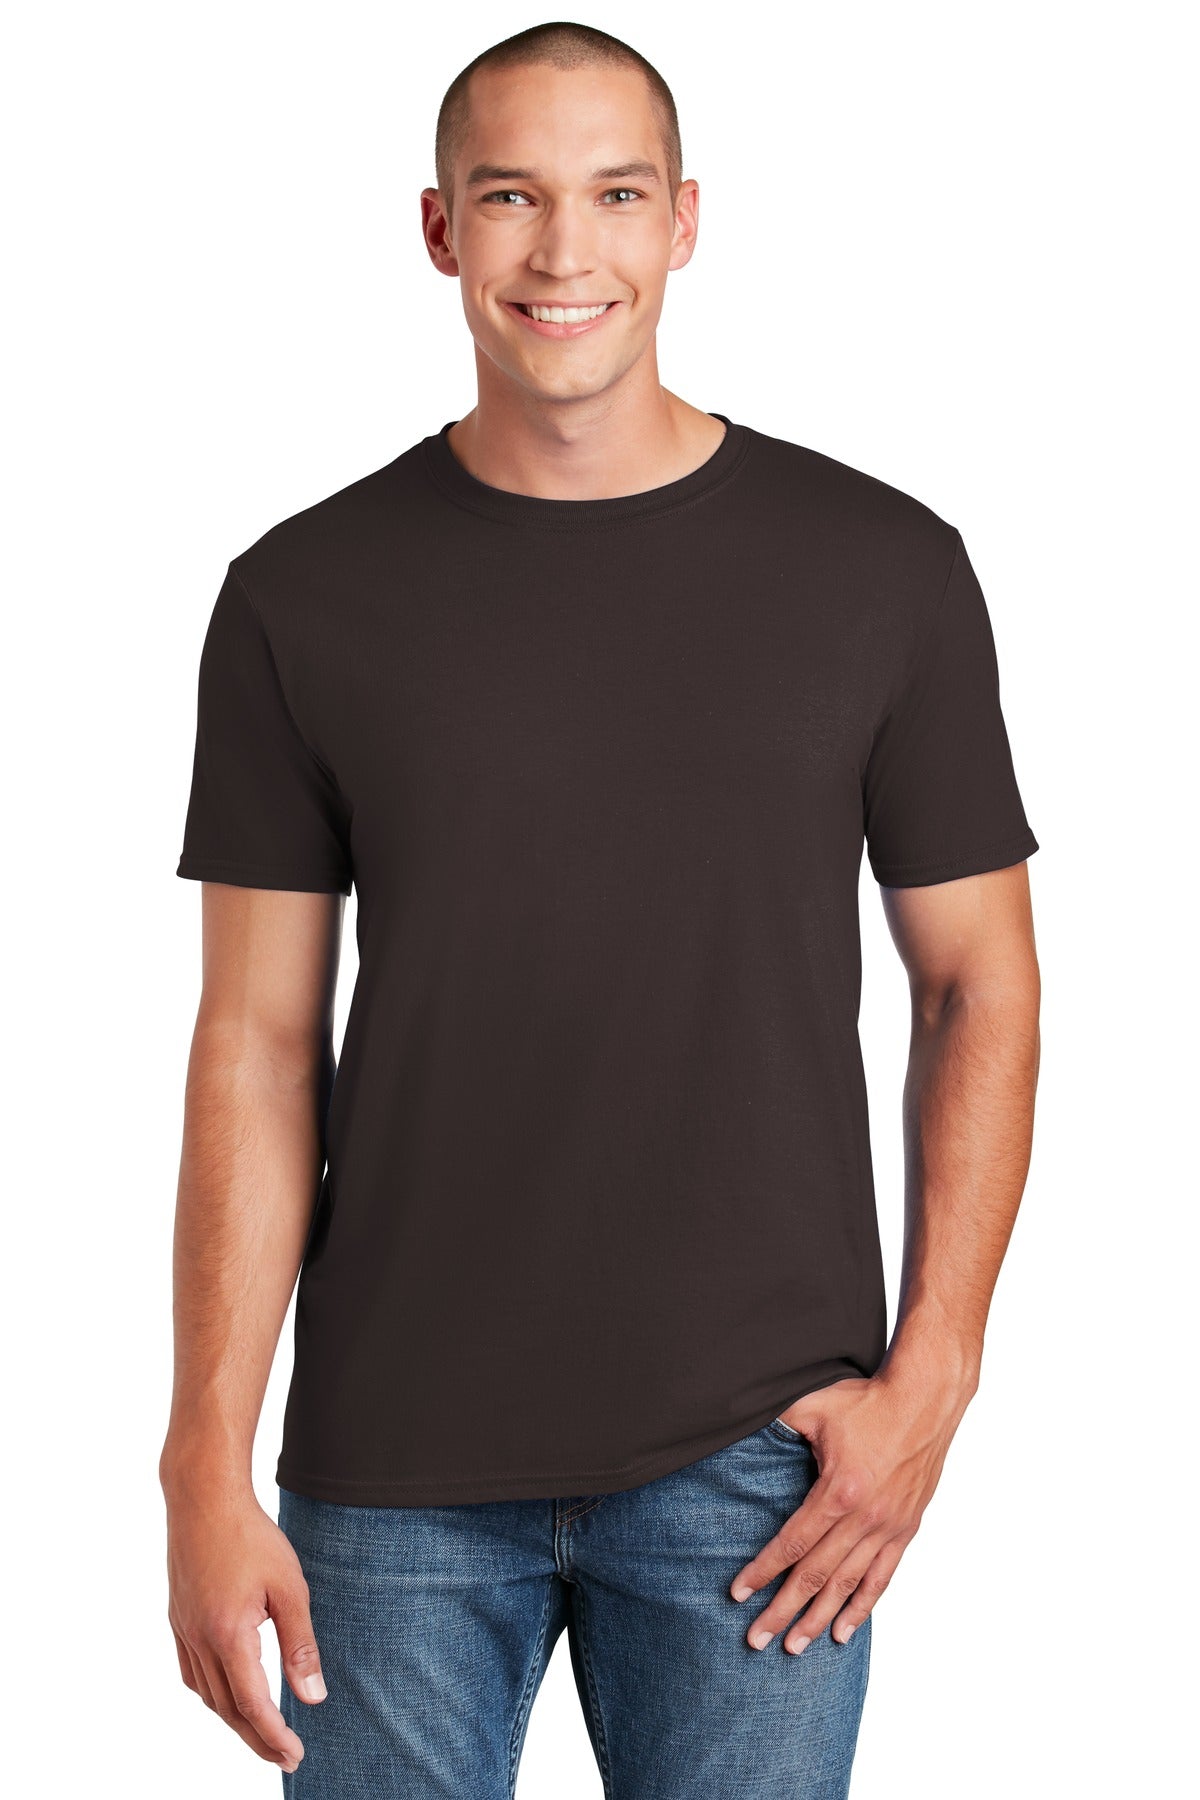 Gildan Softstyle® T-Shirt. 64000 [Dark Chocolate] - DFW Impression